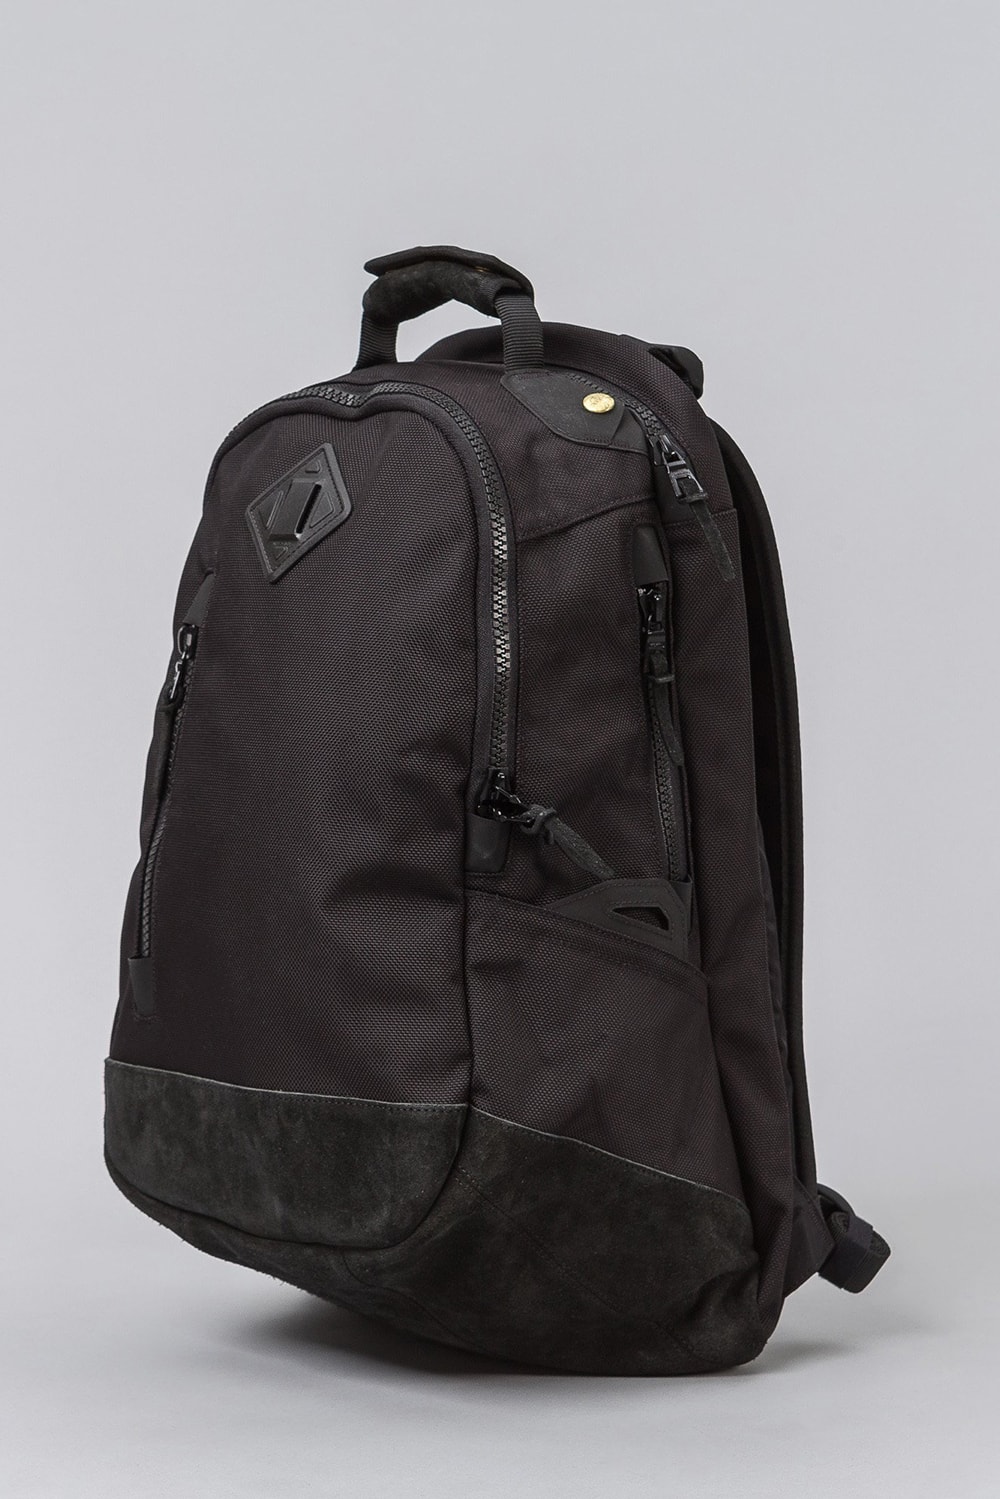 visvim Cordura Backpacks Black Brown Fall Winter 2017 Bags Accessories